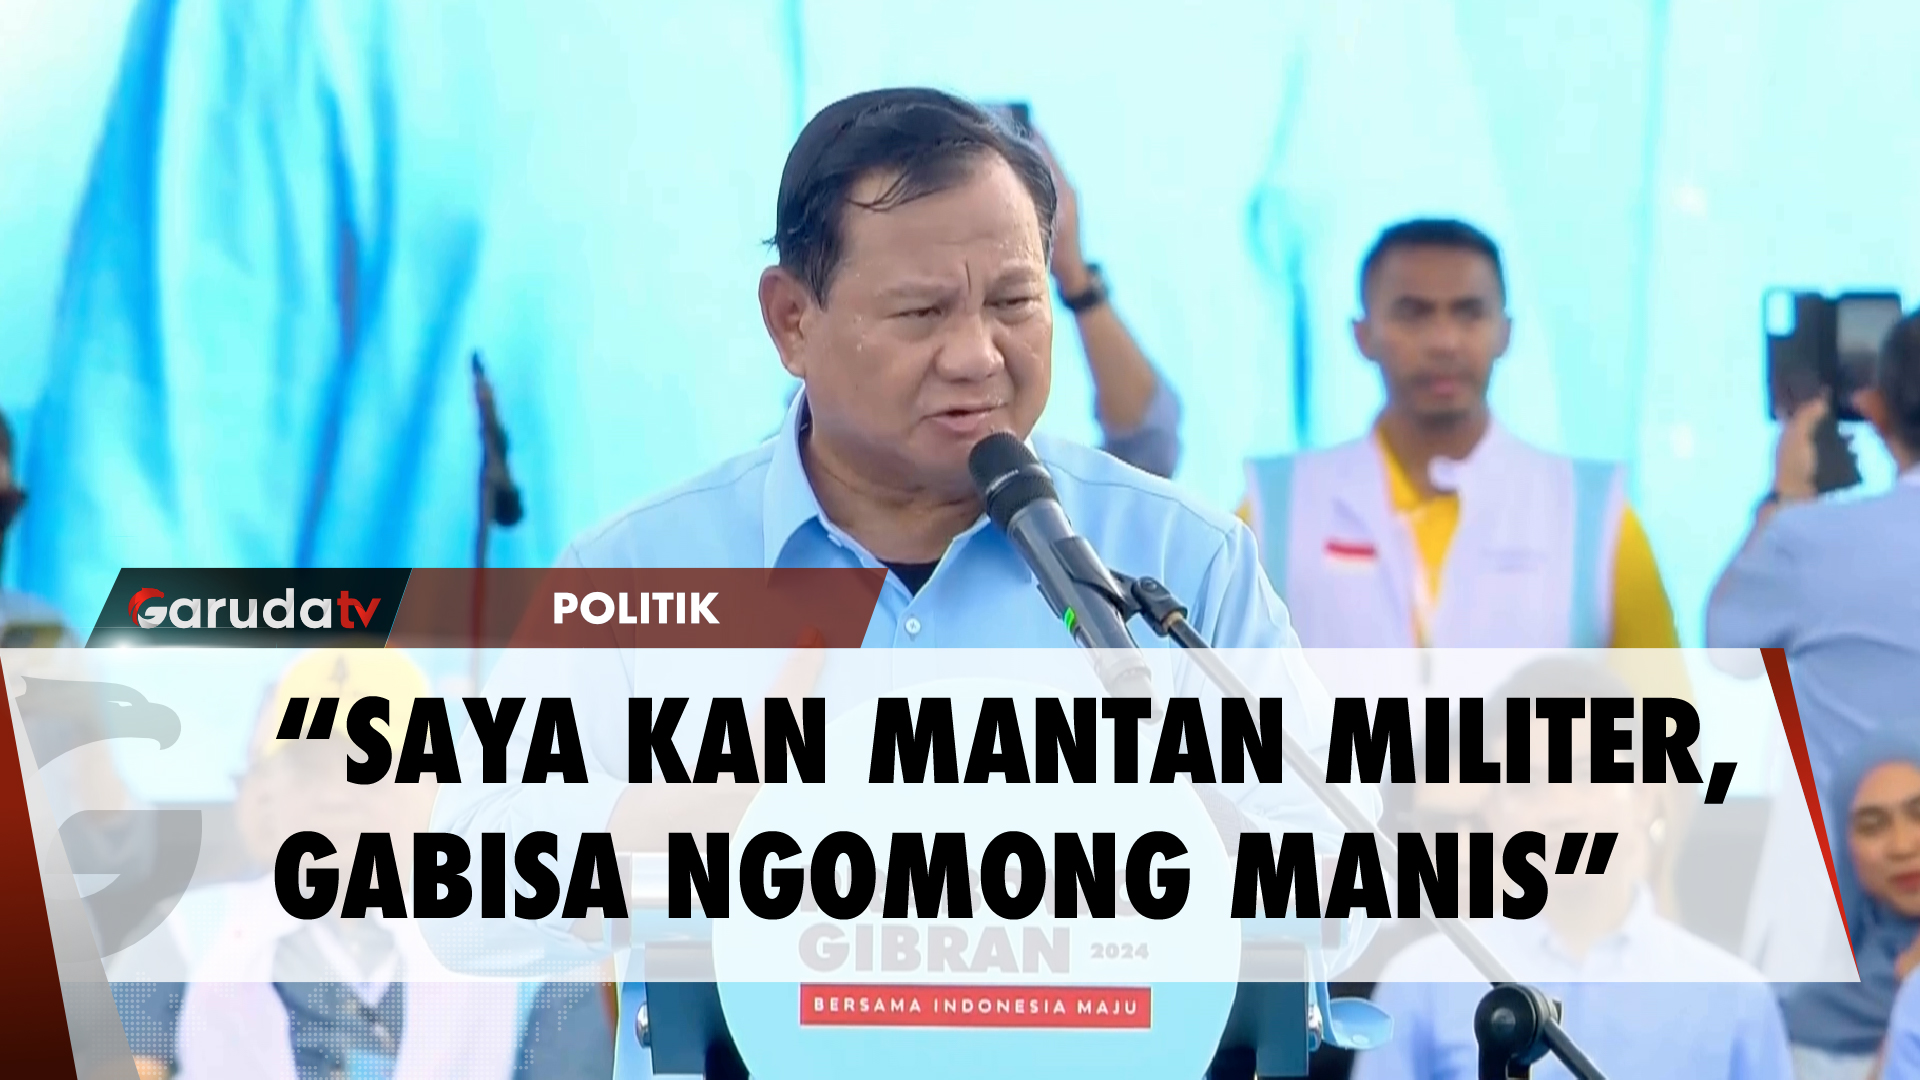 Prabowo Subianto Pilih Bicara Sesuai Fakta Dibanding Tabur Janji Manis